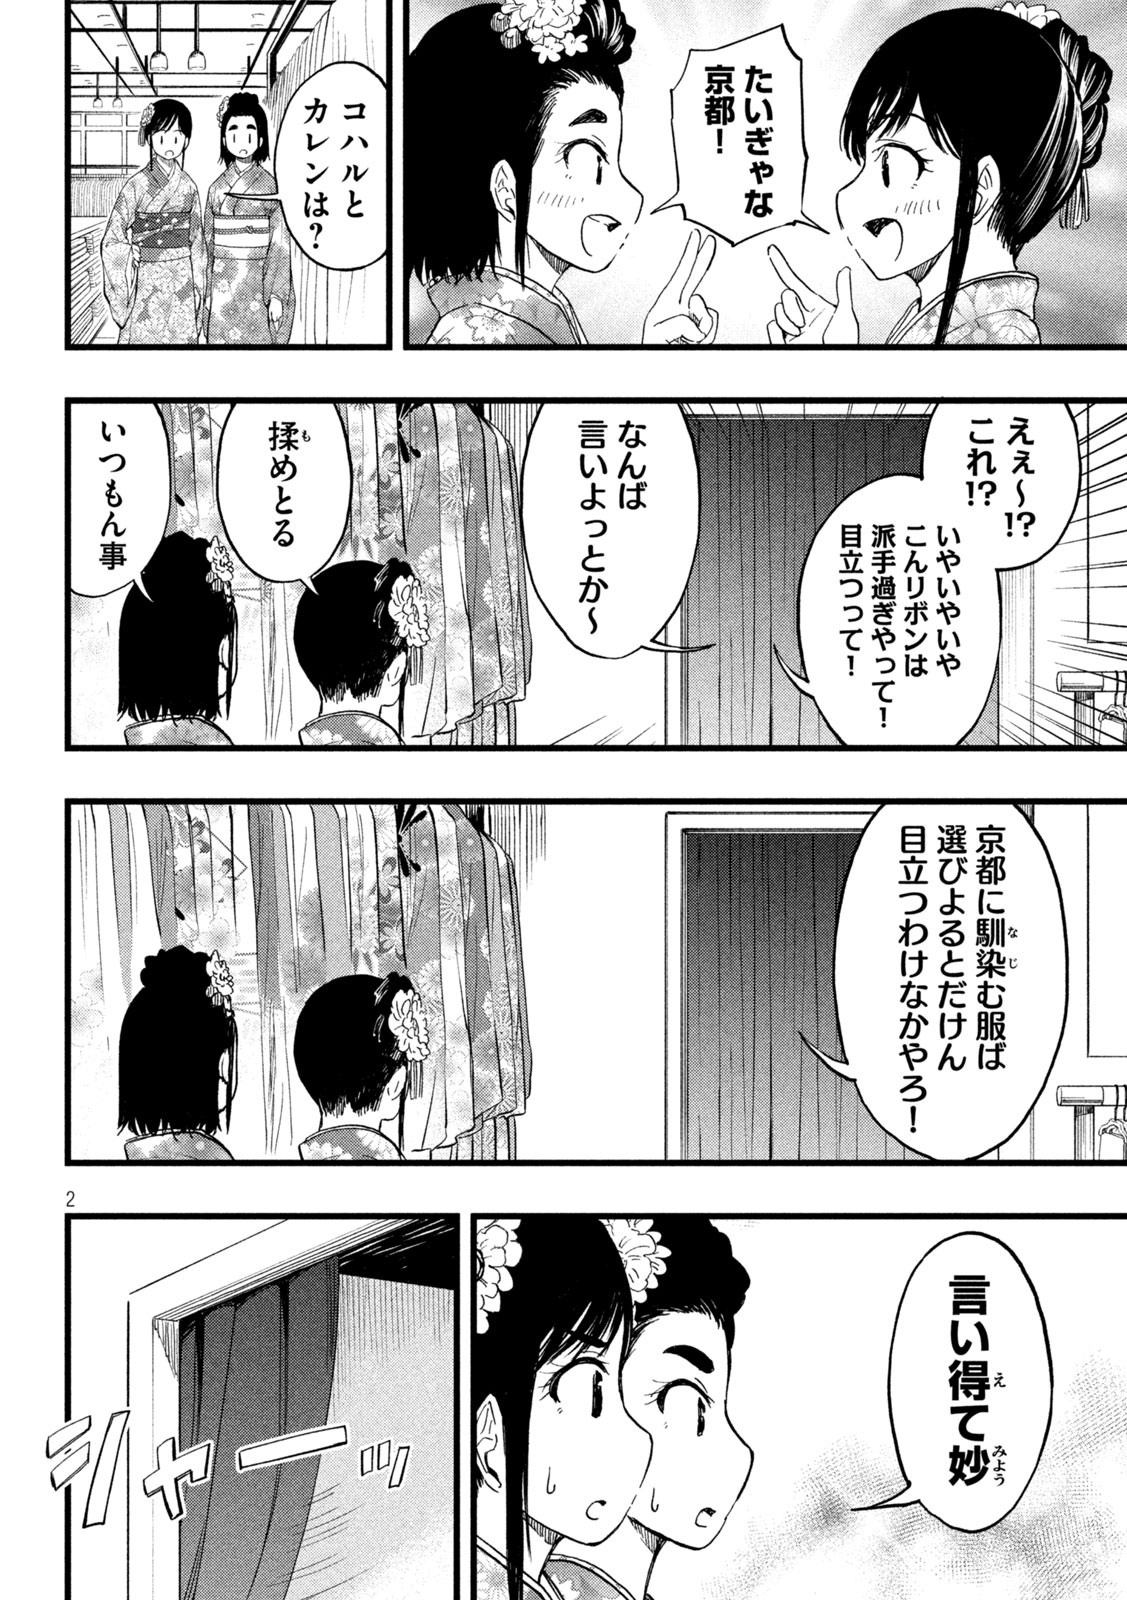 Koharu haru! - Chapter 68 - Page 2